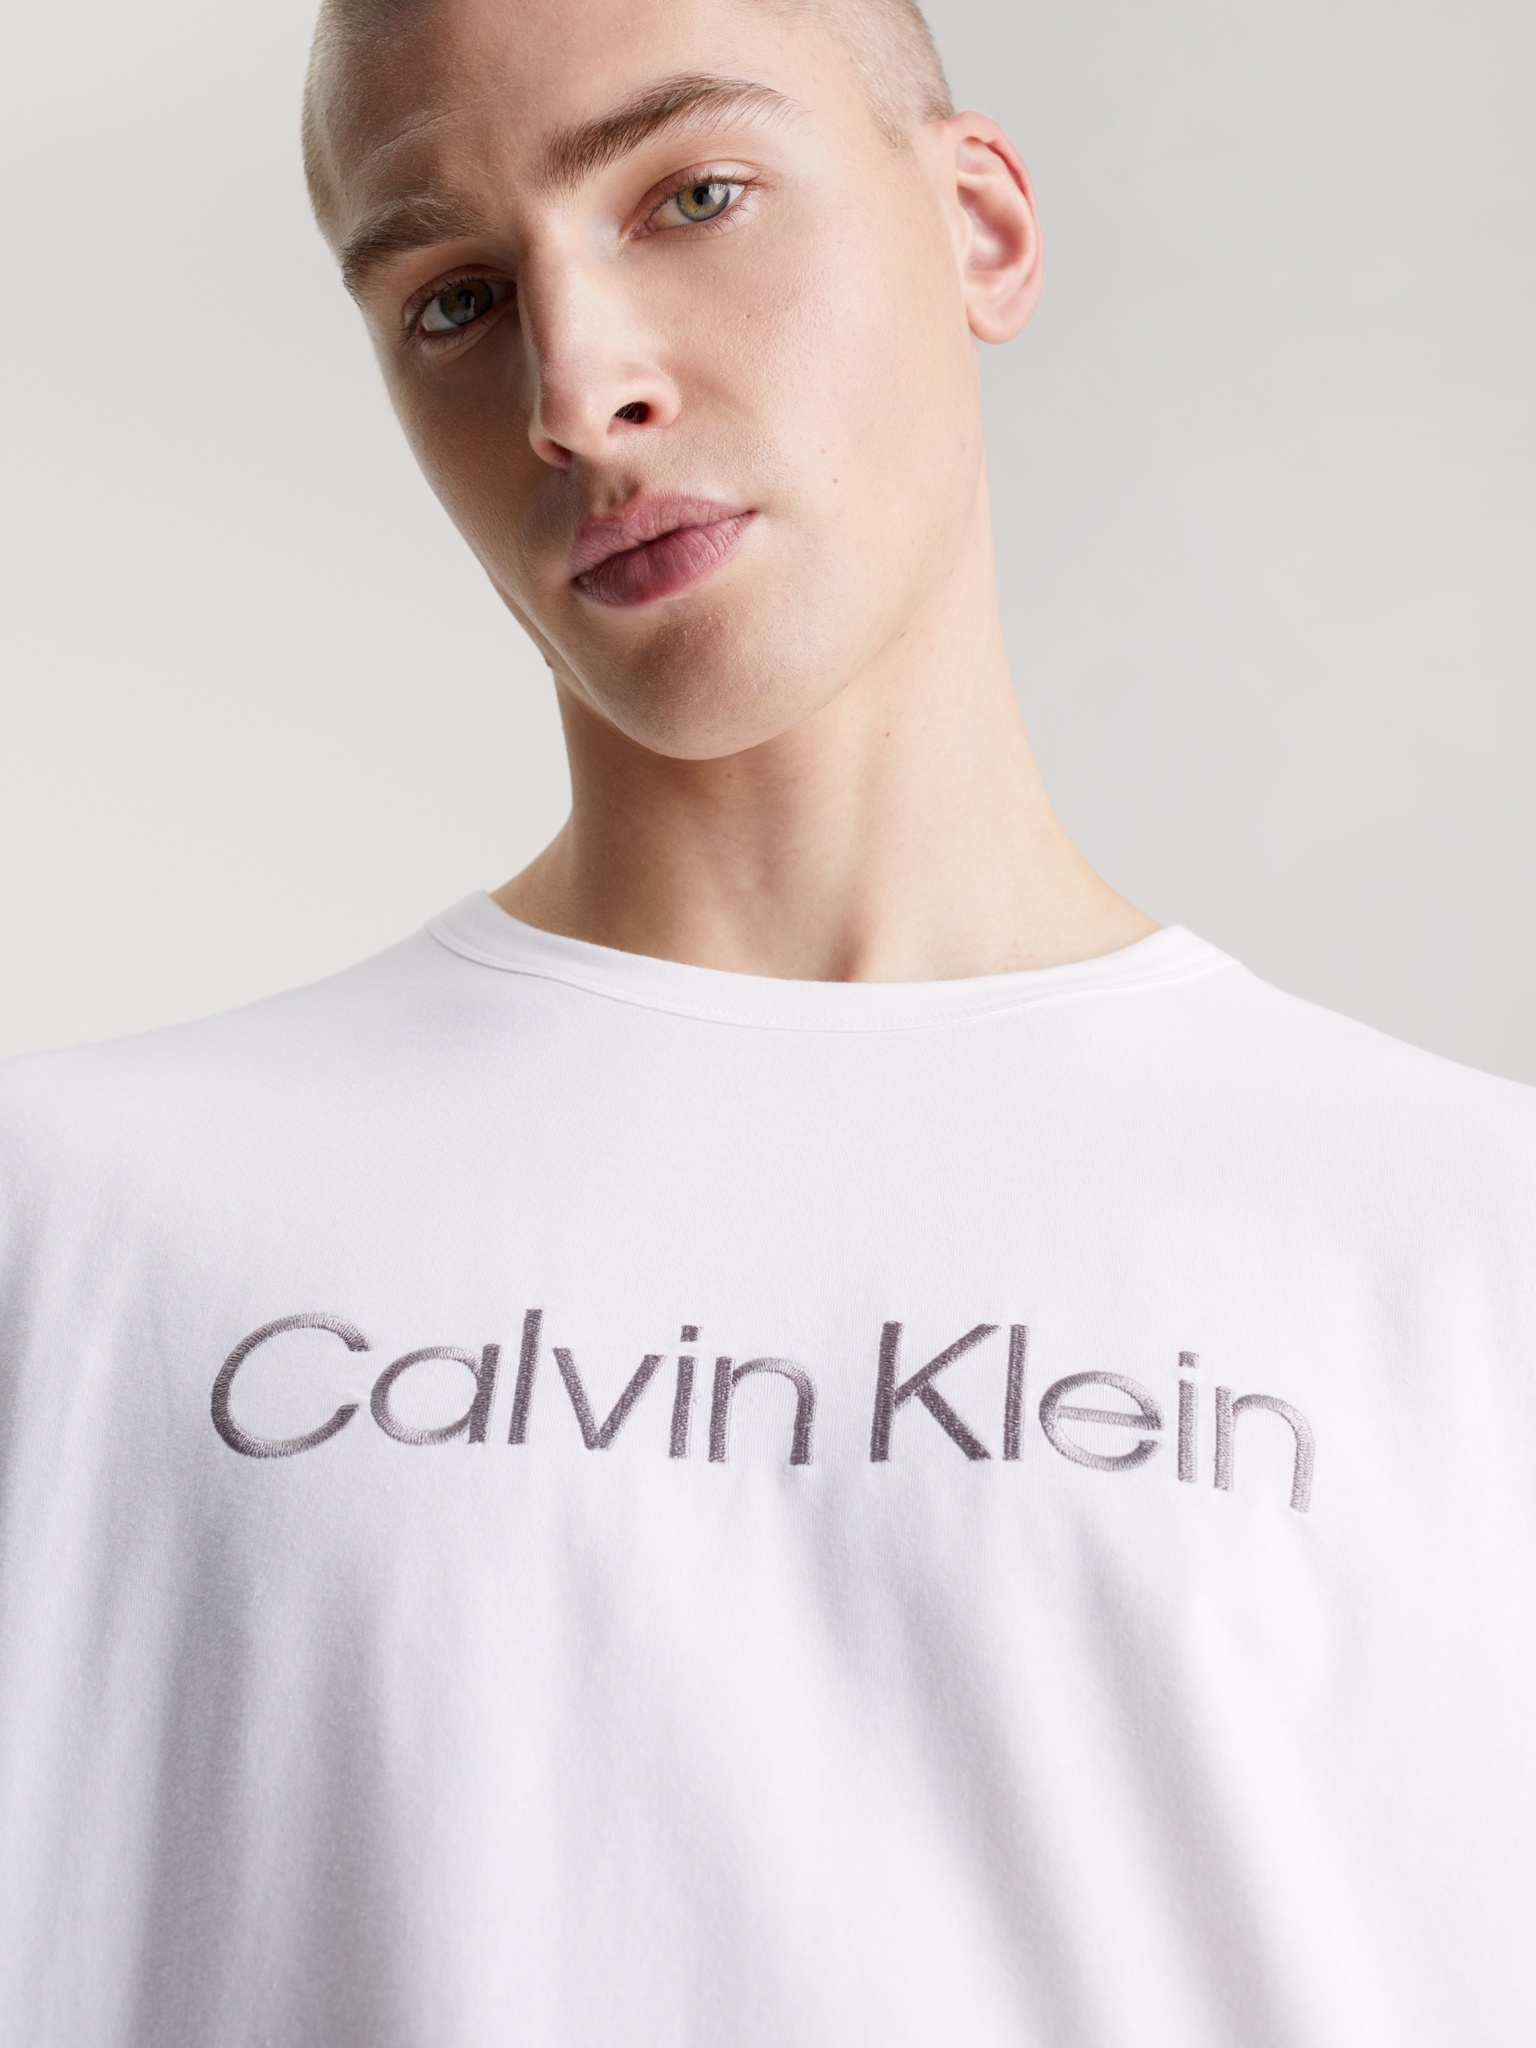 CALVIN KLEIN Pyjama-Top 10734388